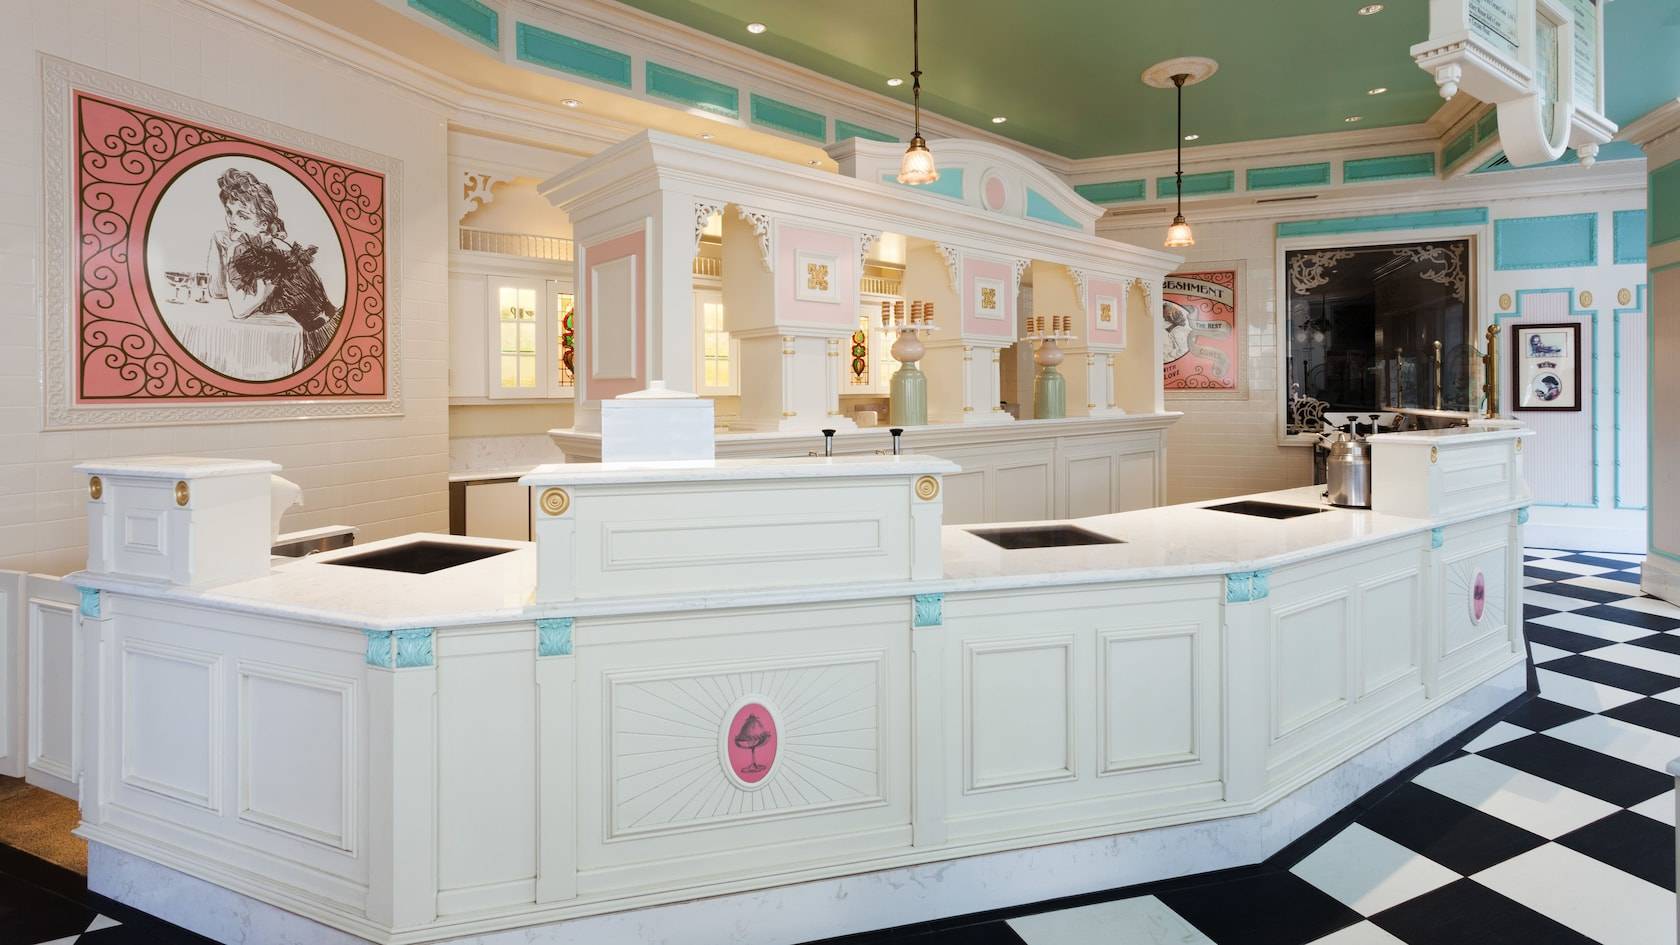 Plaza Ice Cream Parlor closing for a near three month refurbishment